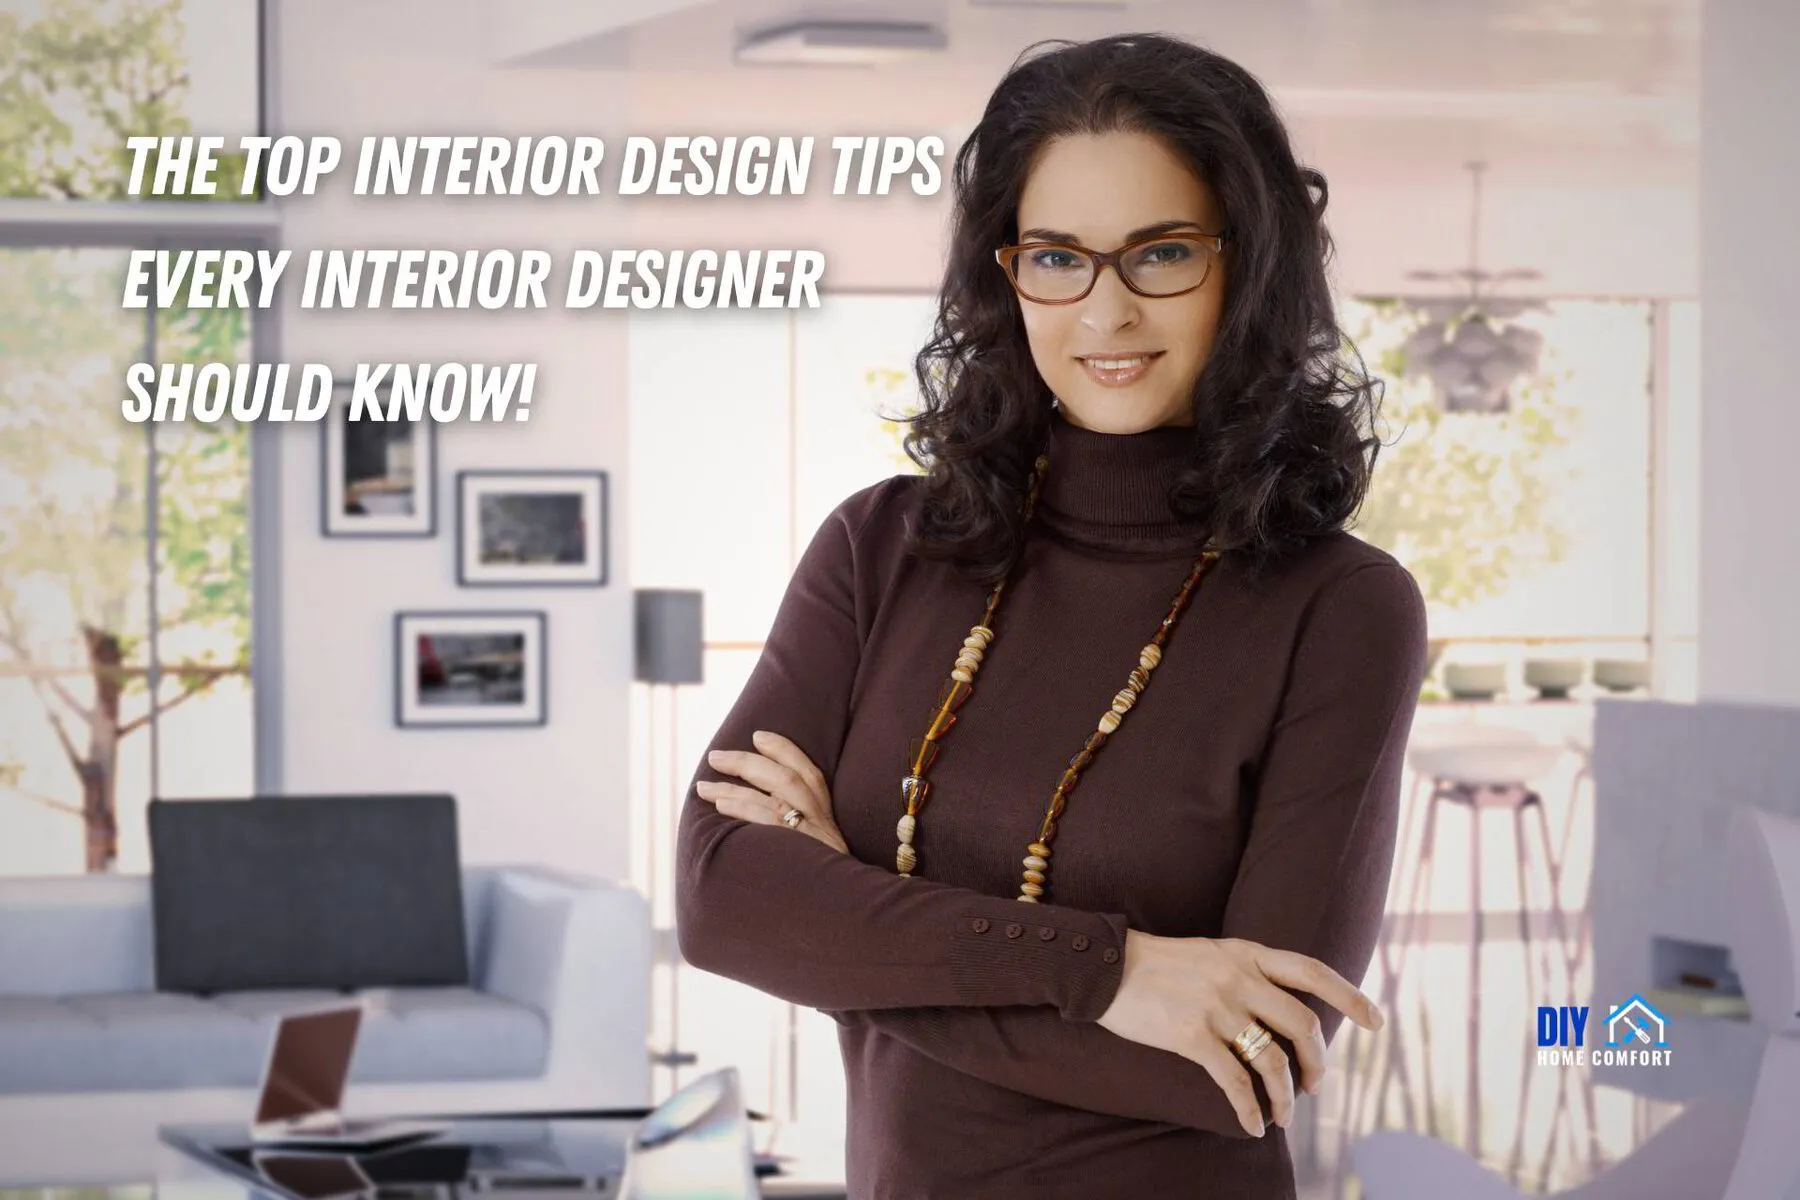 The Top Interior Design Tips Every Interior Designer Should Know! | DIY Home Comfort